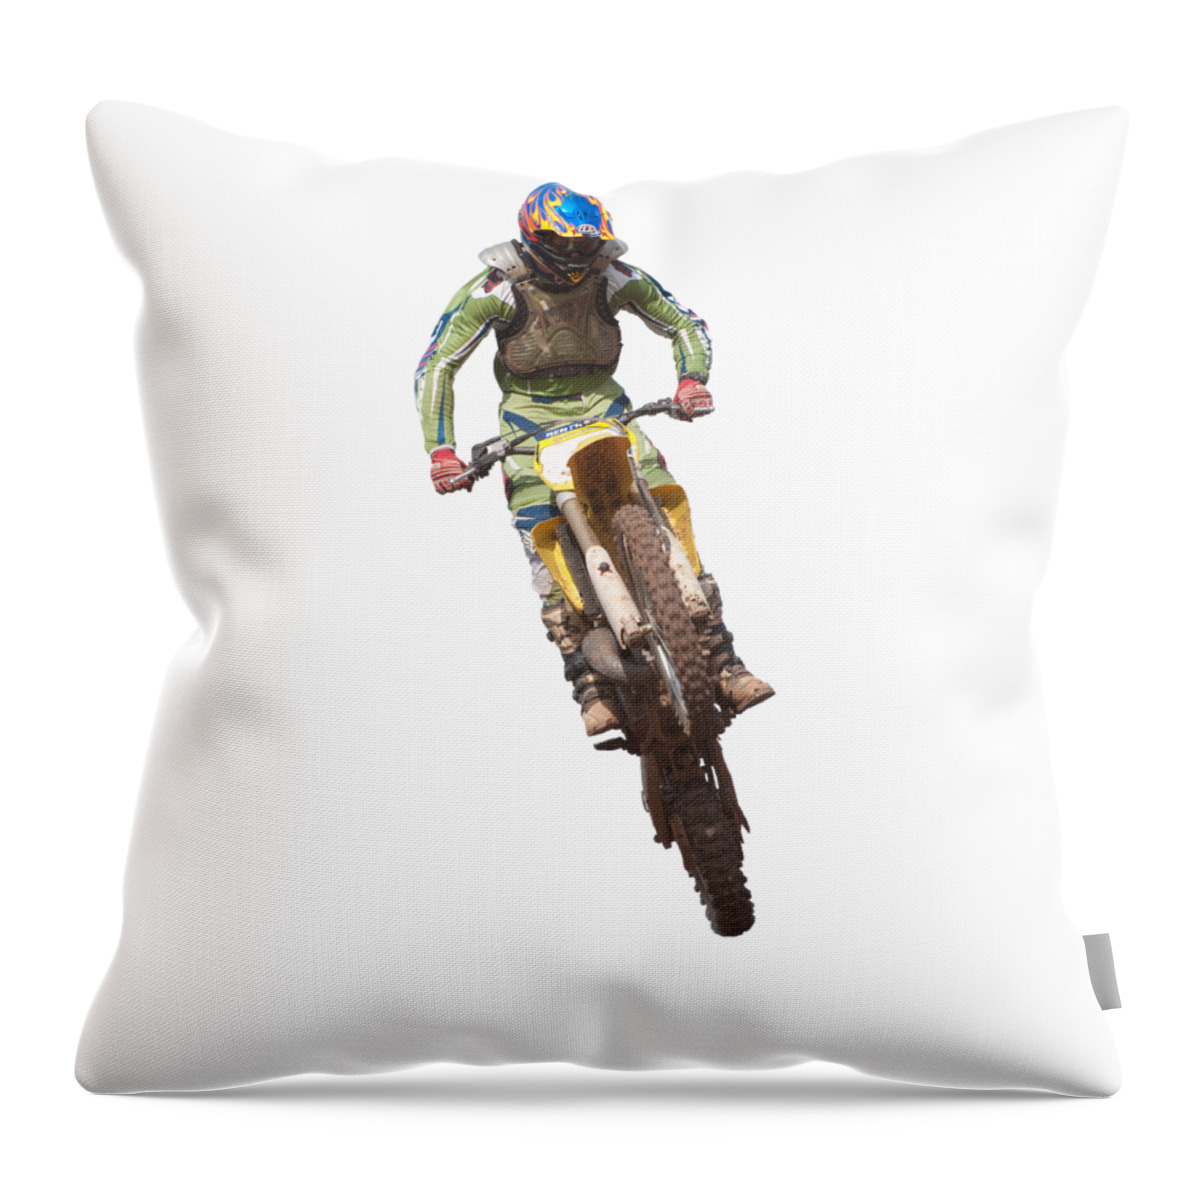 Motorcross Throw Pillow featuring the photograph Motocross rider by Roy Pedersen